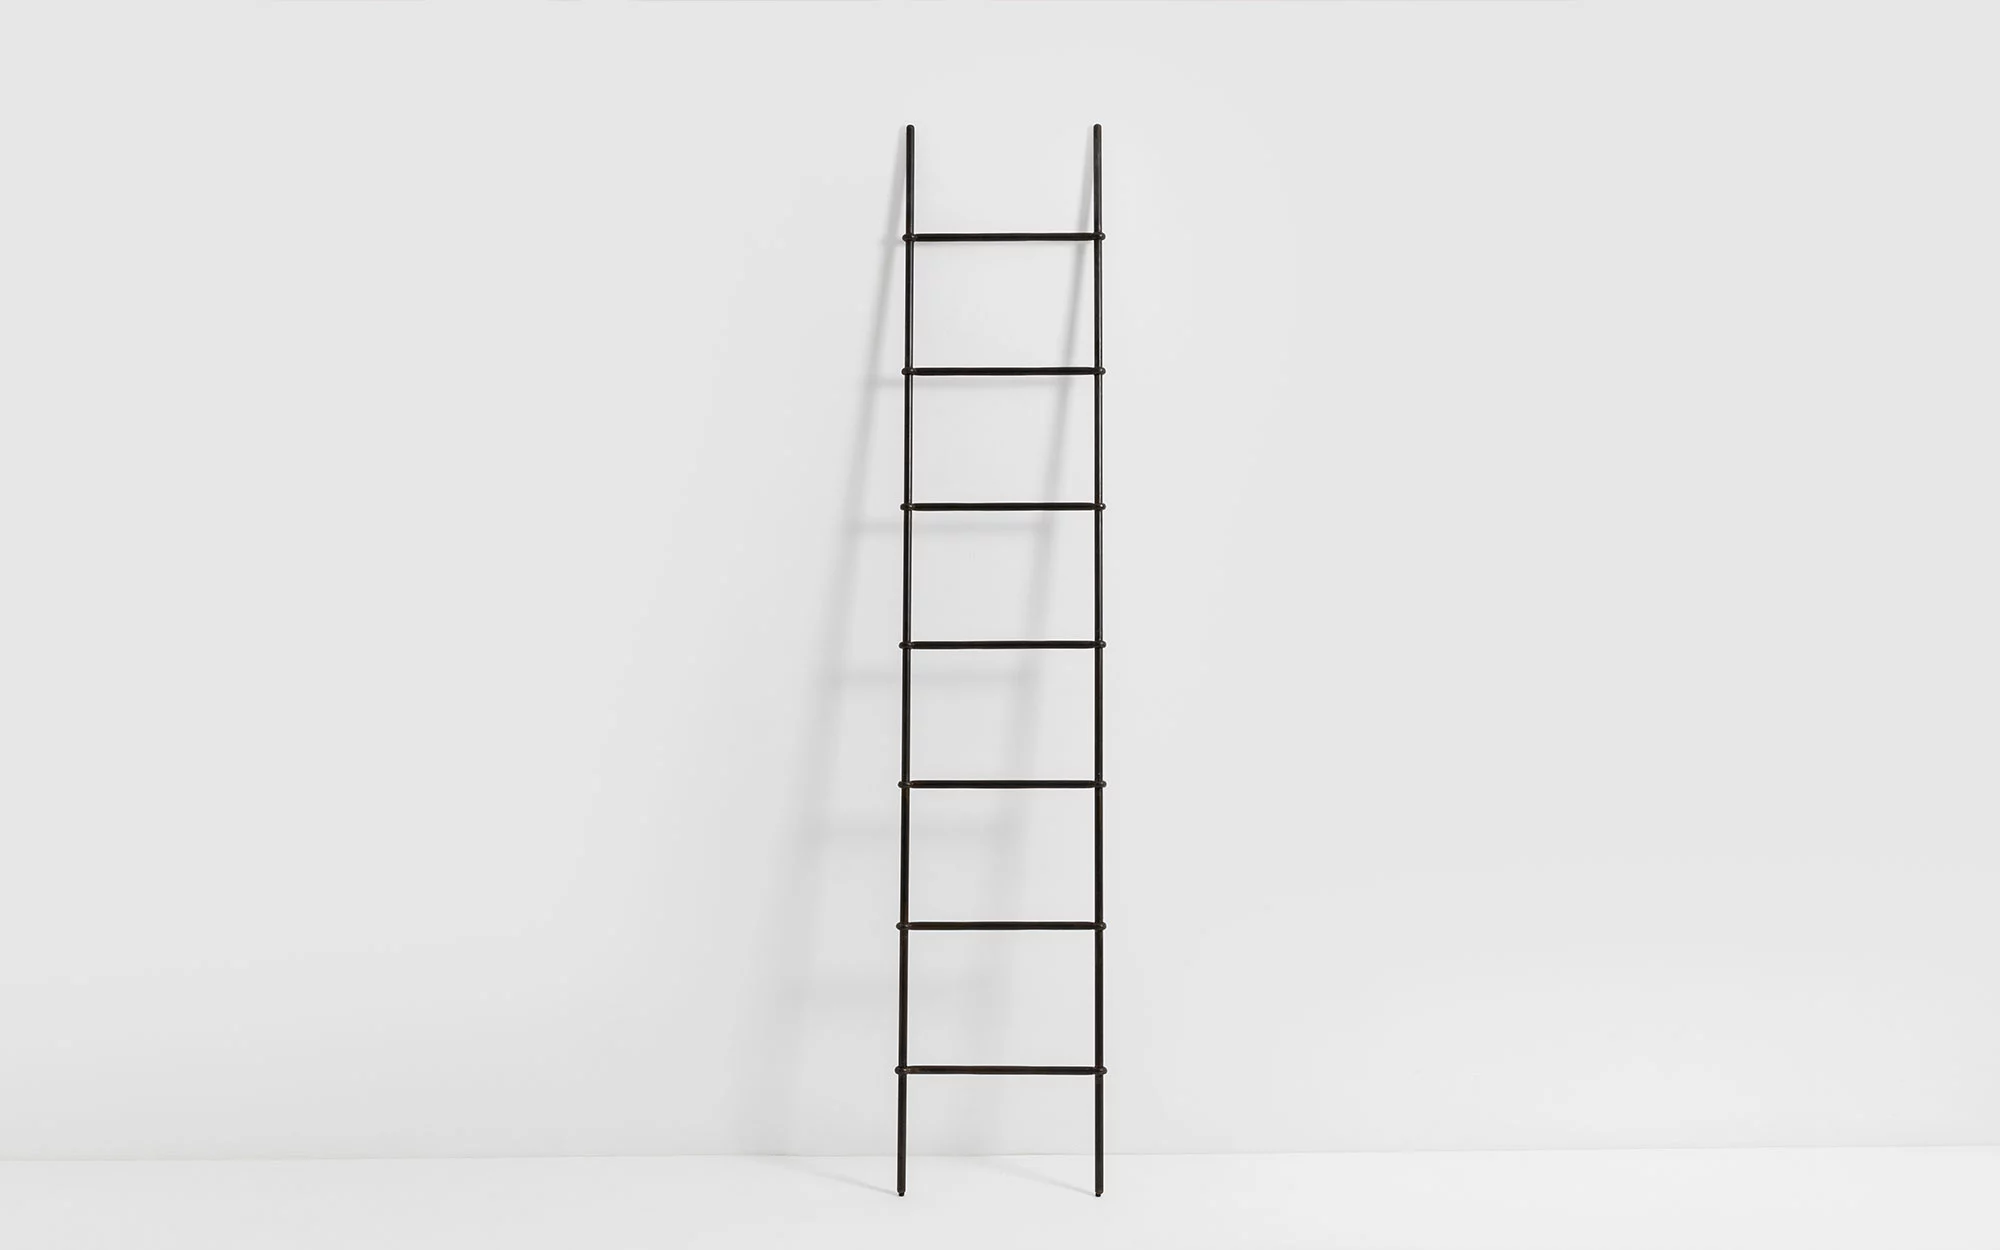 Ciel ladder - Ronan & Erwan Bouroullec - Miscellaneous - Galerie kreo